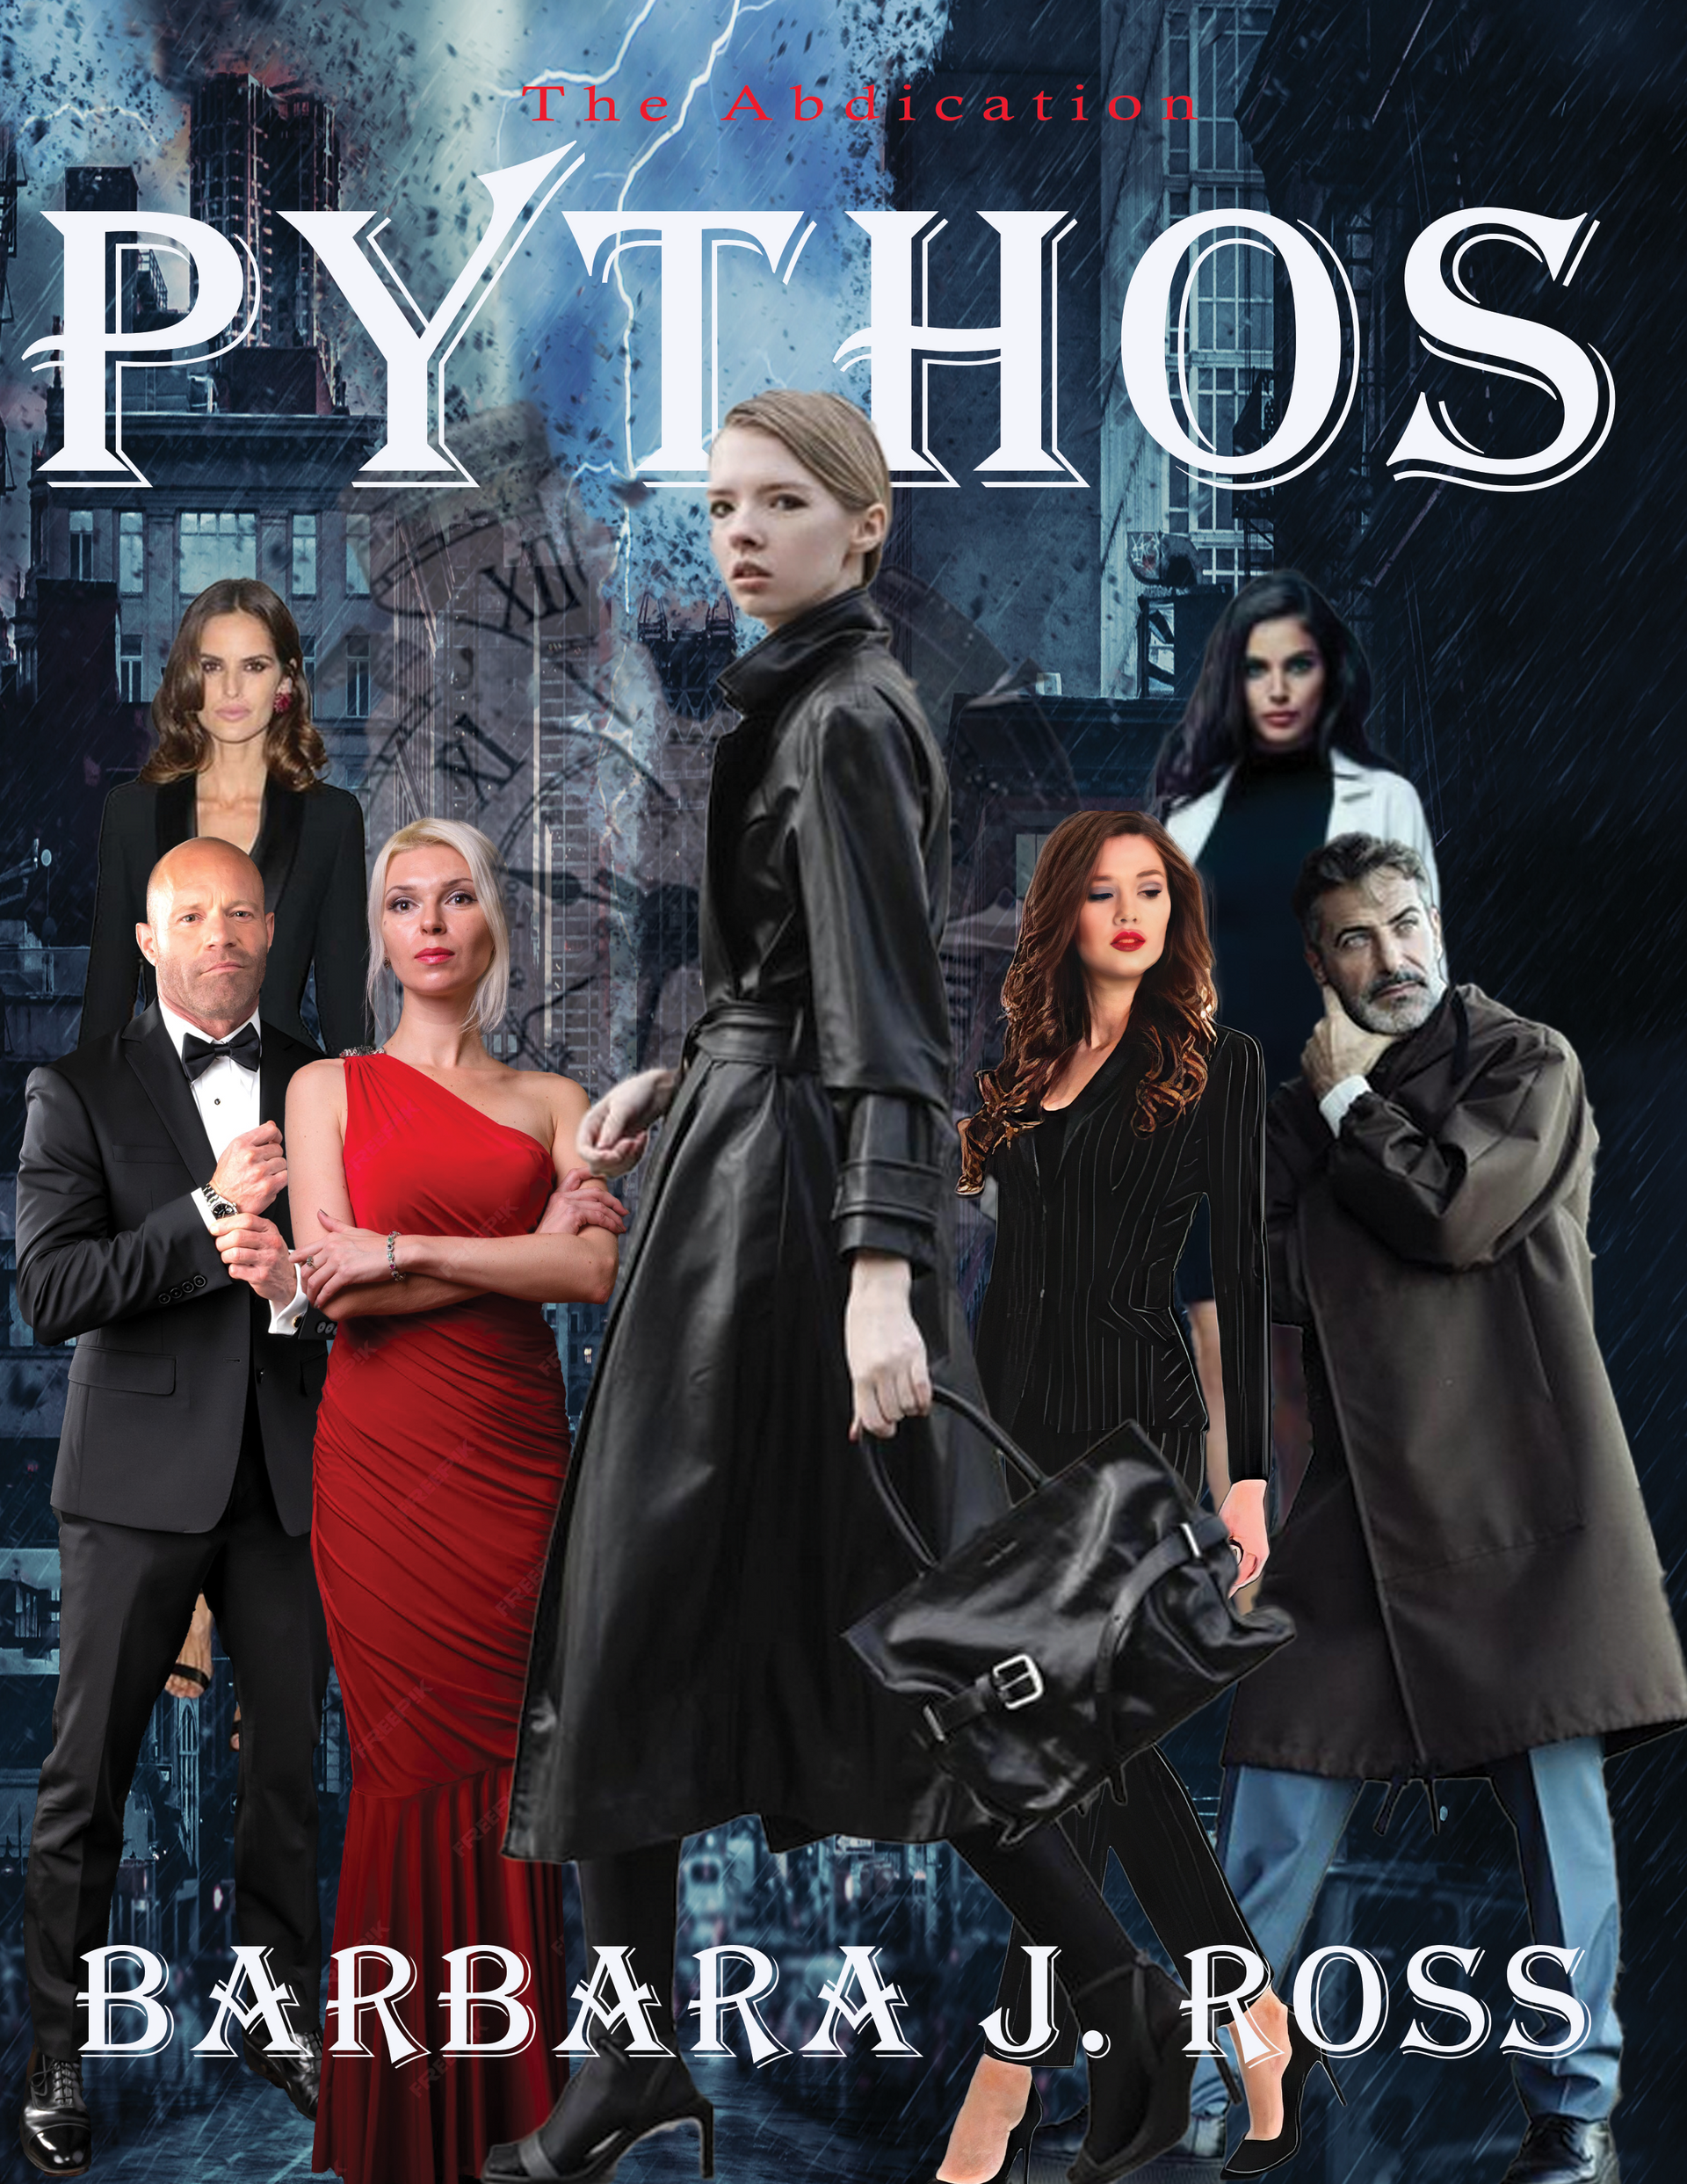 A Novel called Pythos, written by Barbara J. Ross